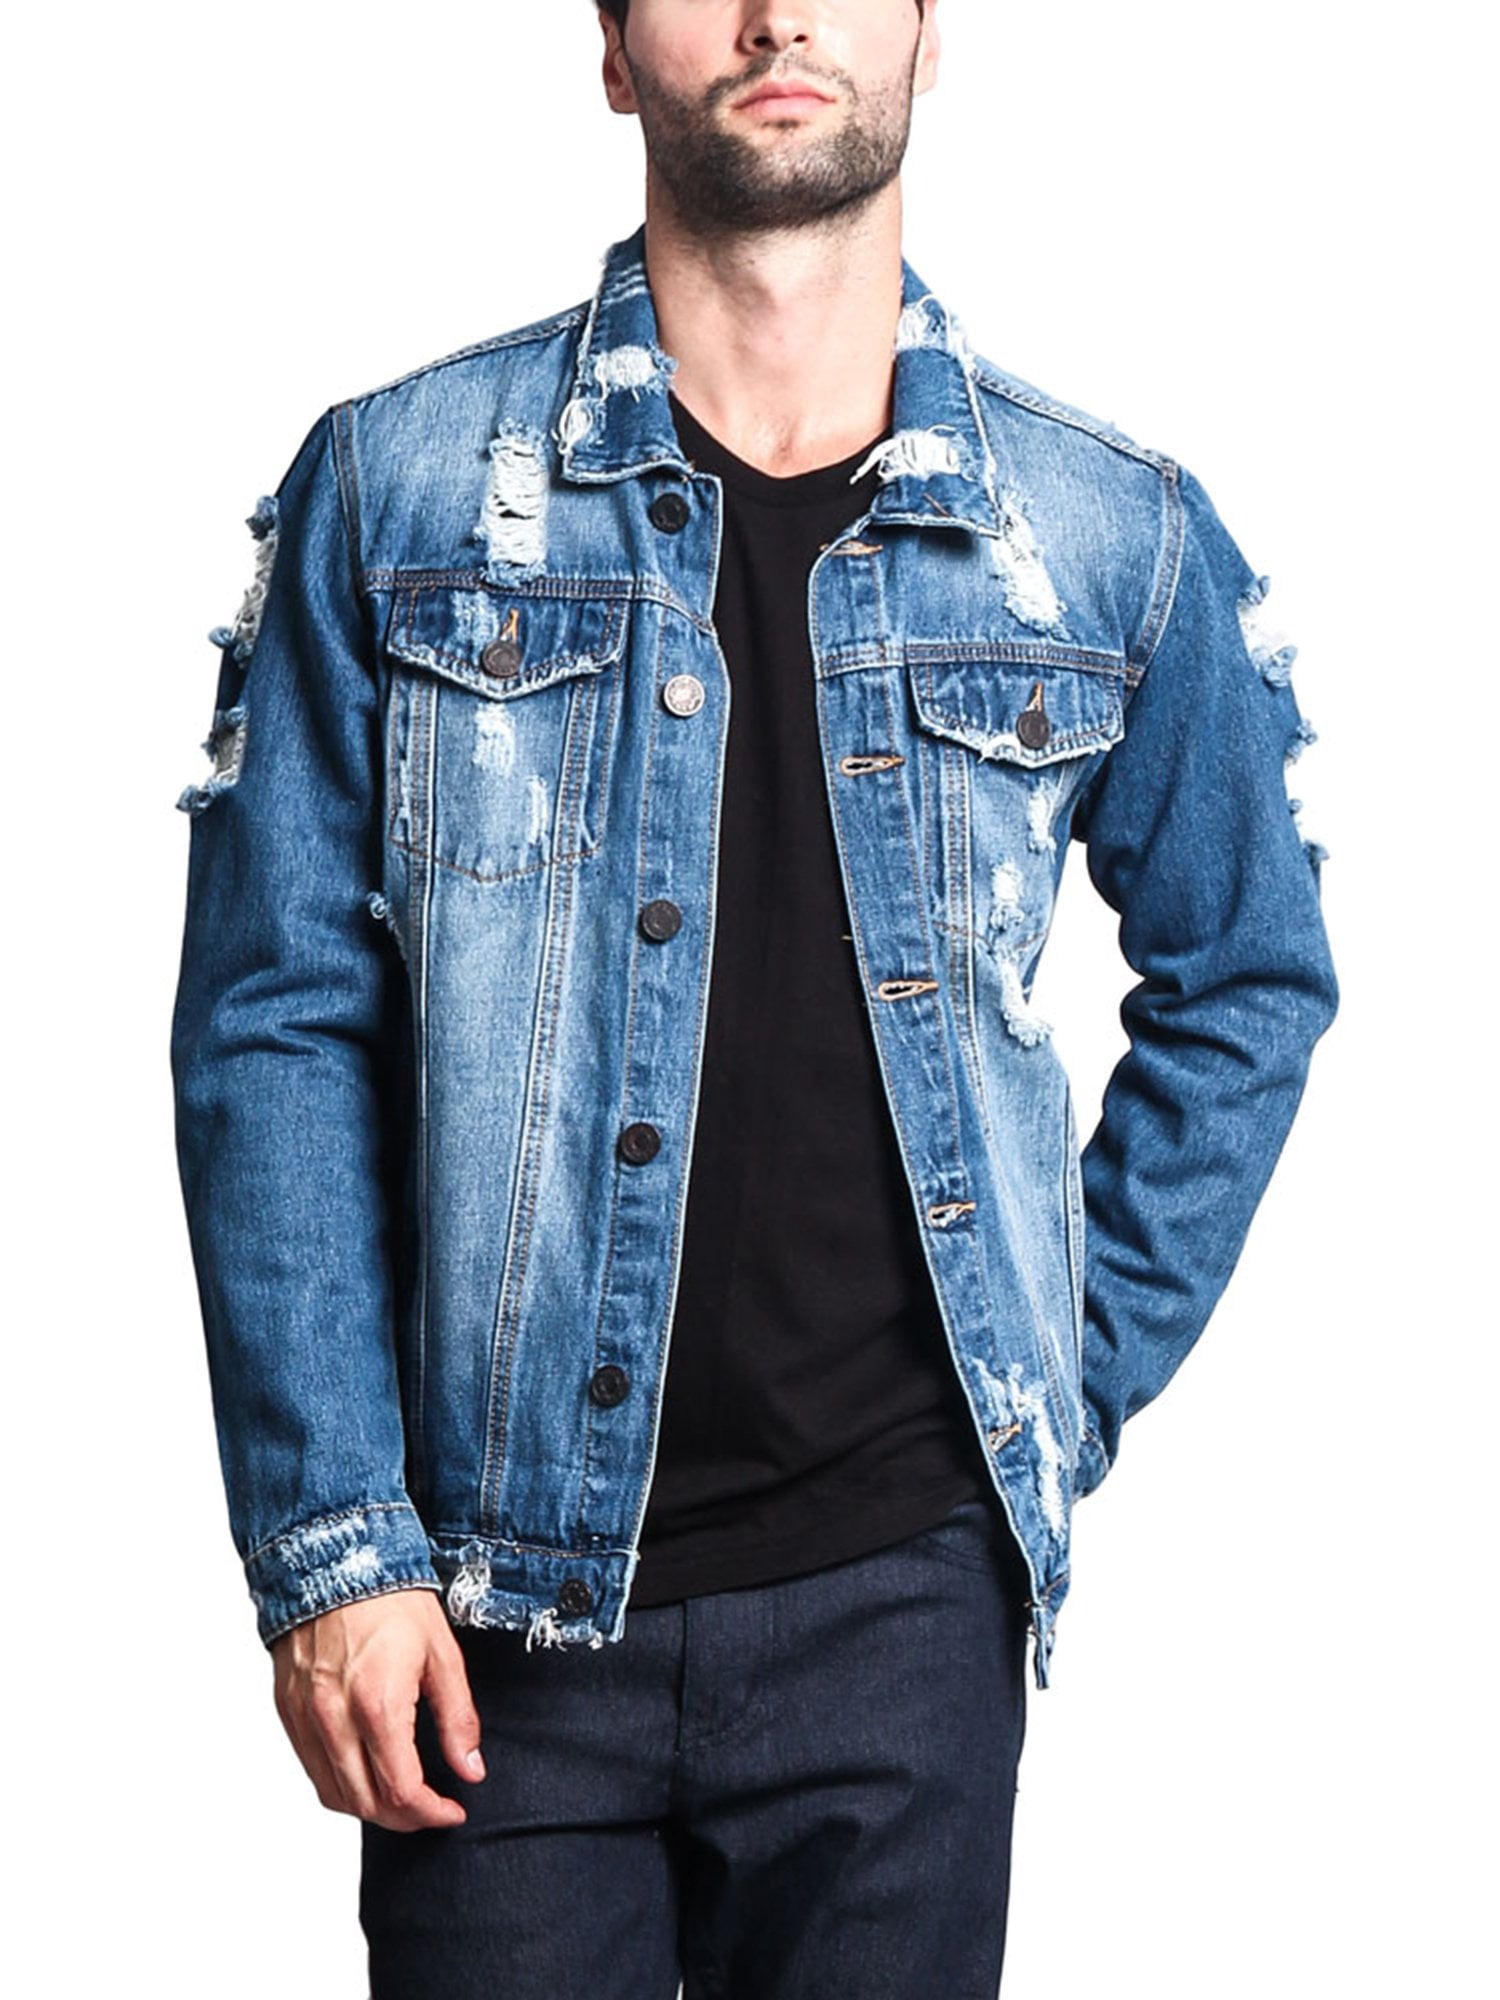 Jean jacket men’s – A Nice and Warm Jacket缩略图